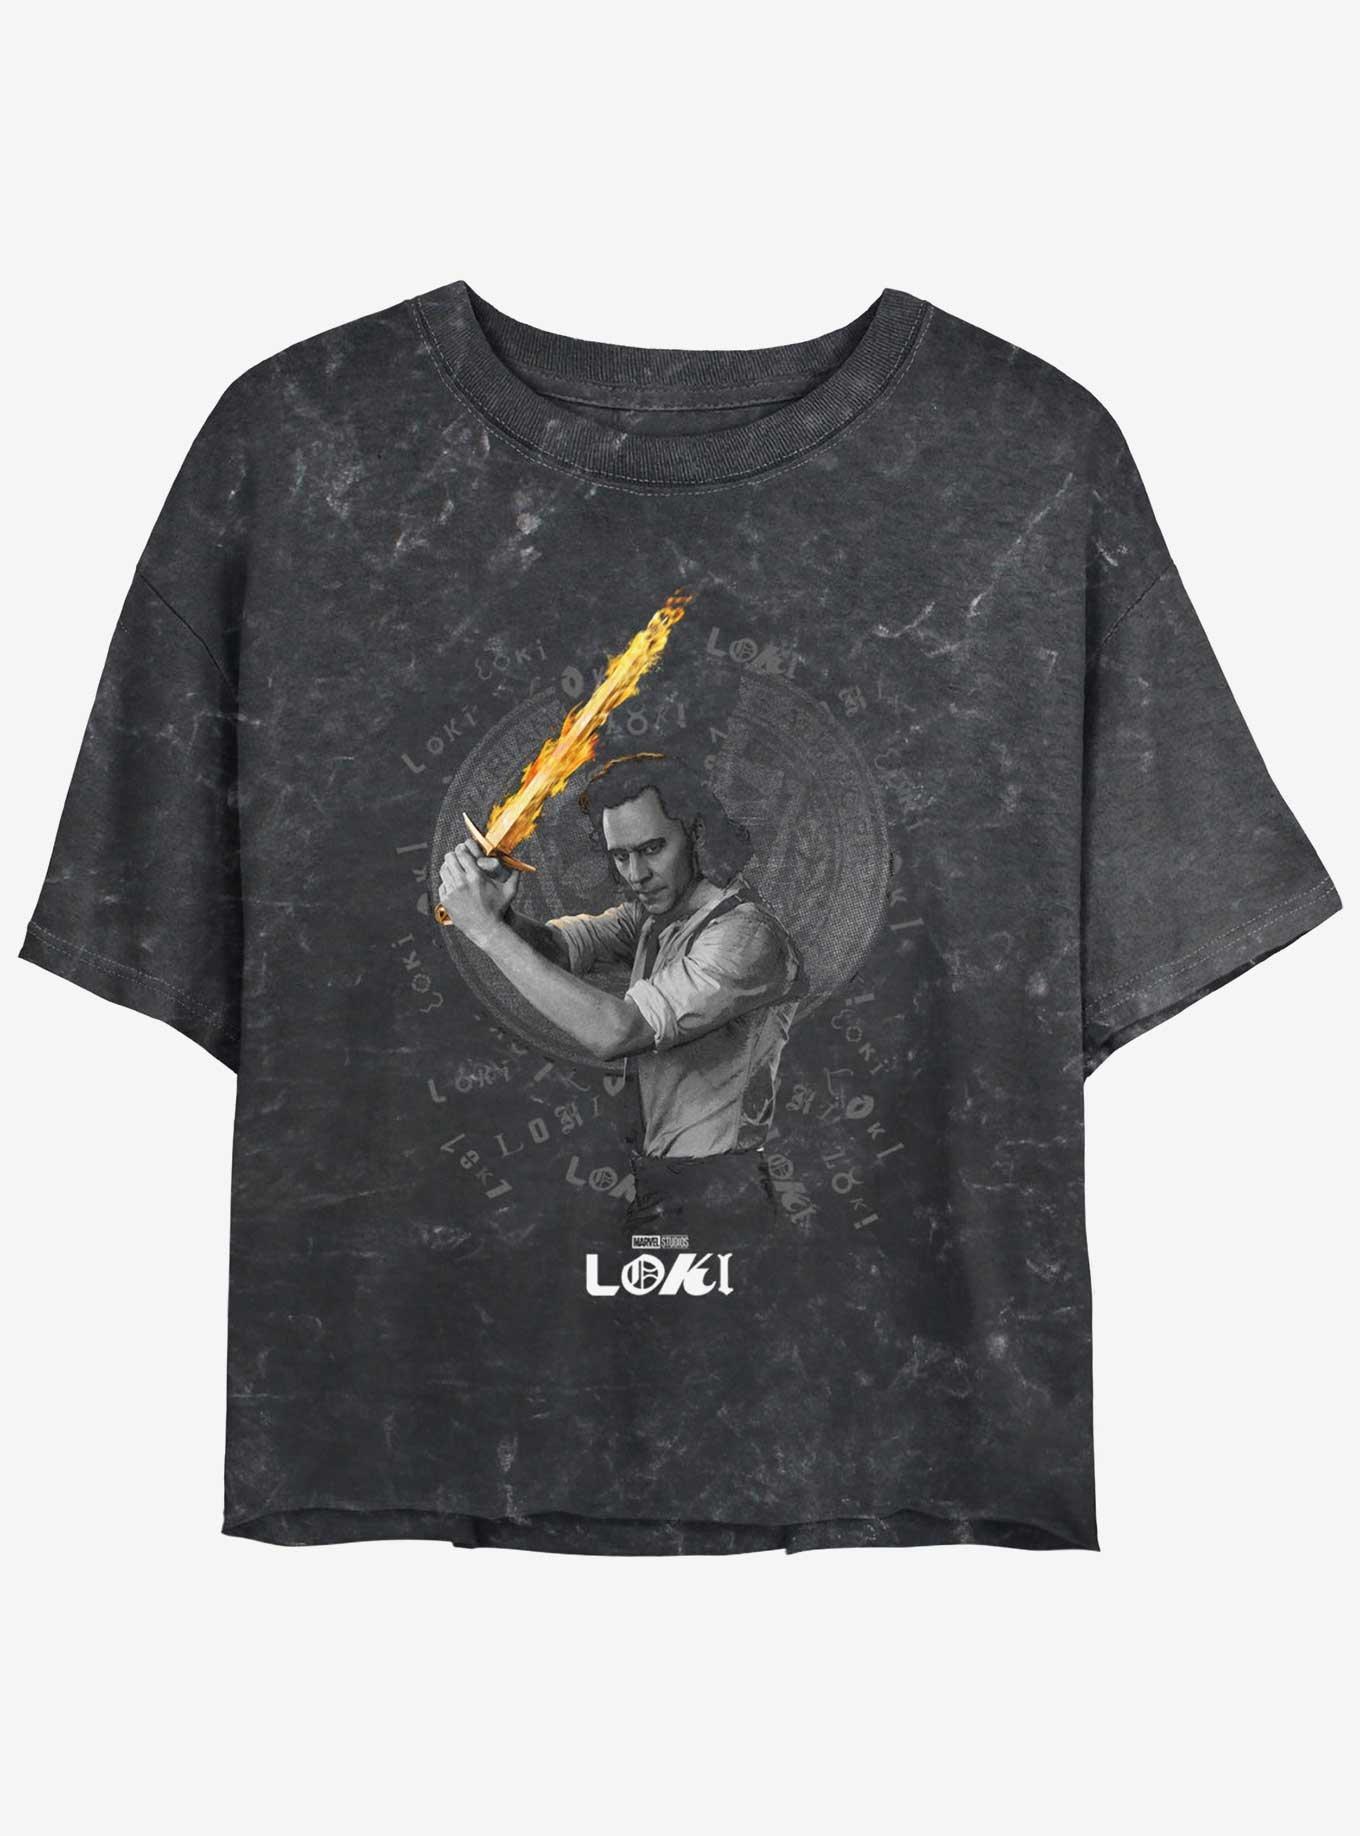 Marvel Loki Laevateinn Flaming Sword Girls Mineral Wash Crop T-Shirt